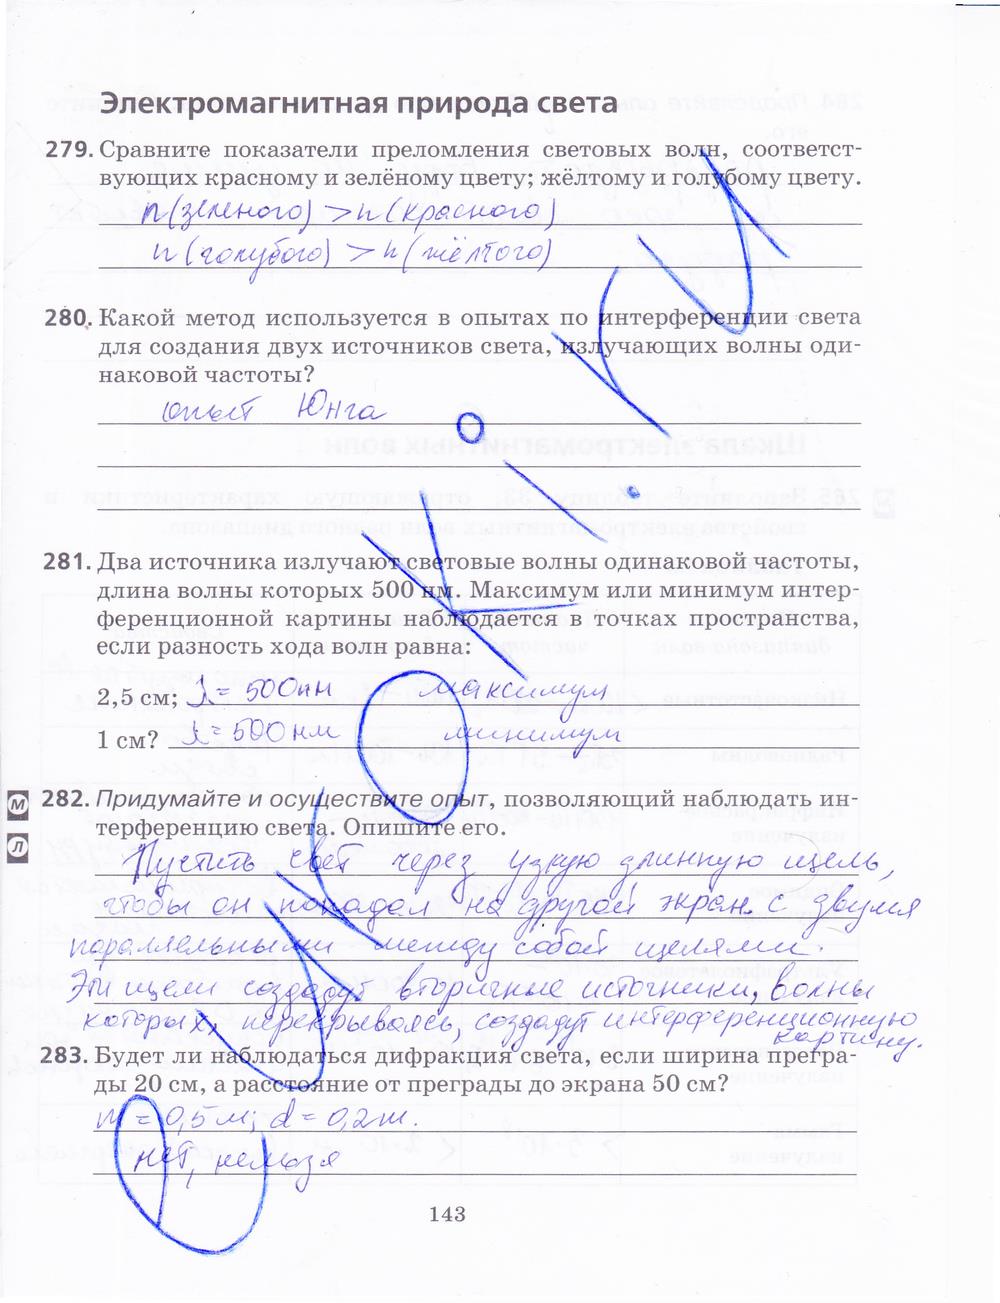 гдз 9 класс рабочая тетрадь страница 143 физика Пурышева, Важеевская, Чаругин